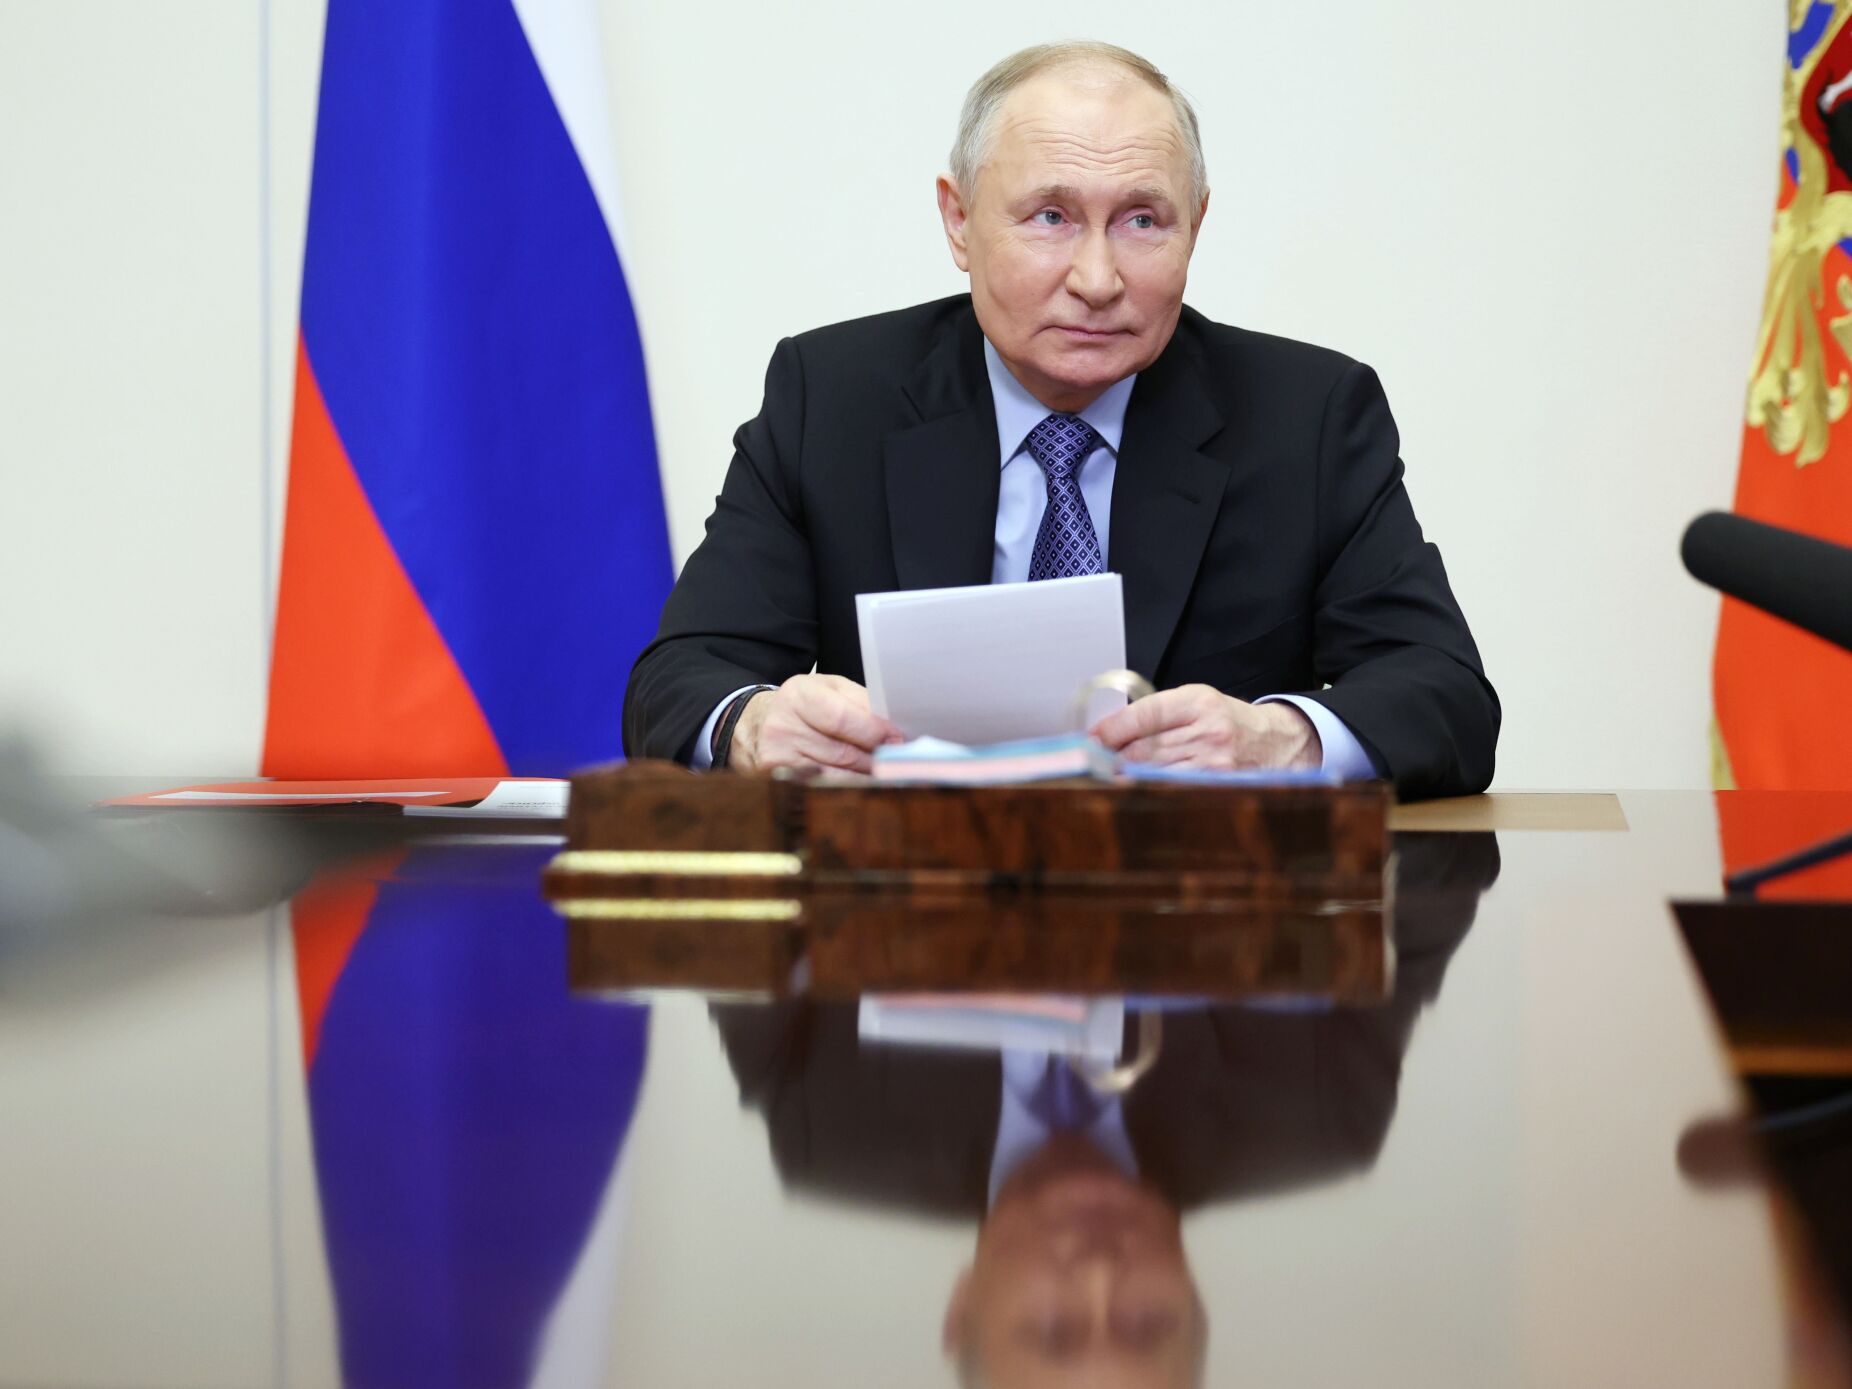 Putin manda confiscar bens de quem criticar o exército